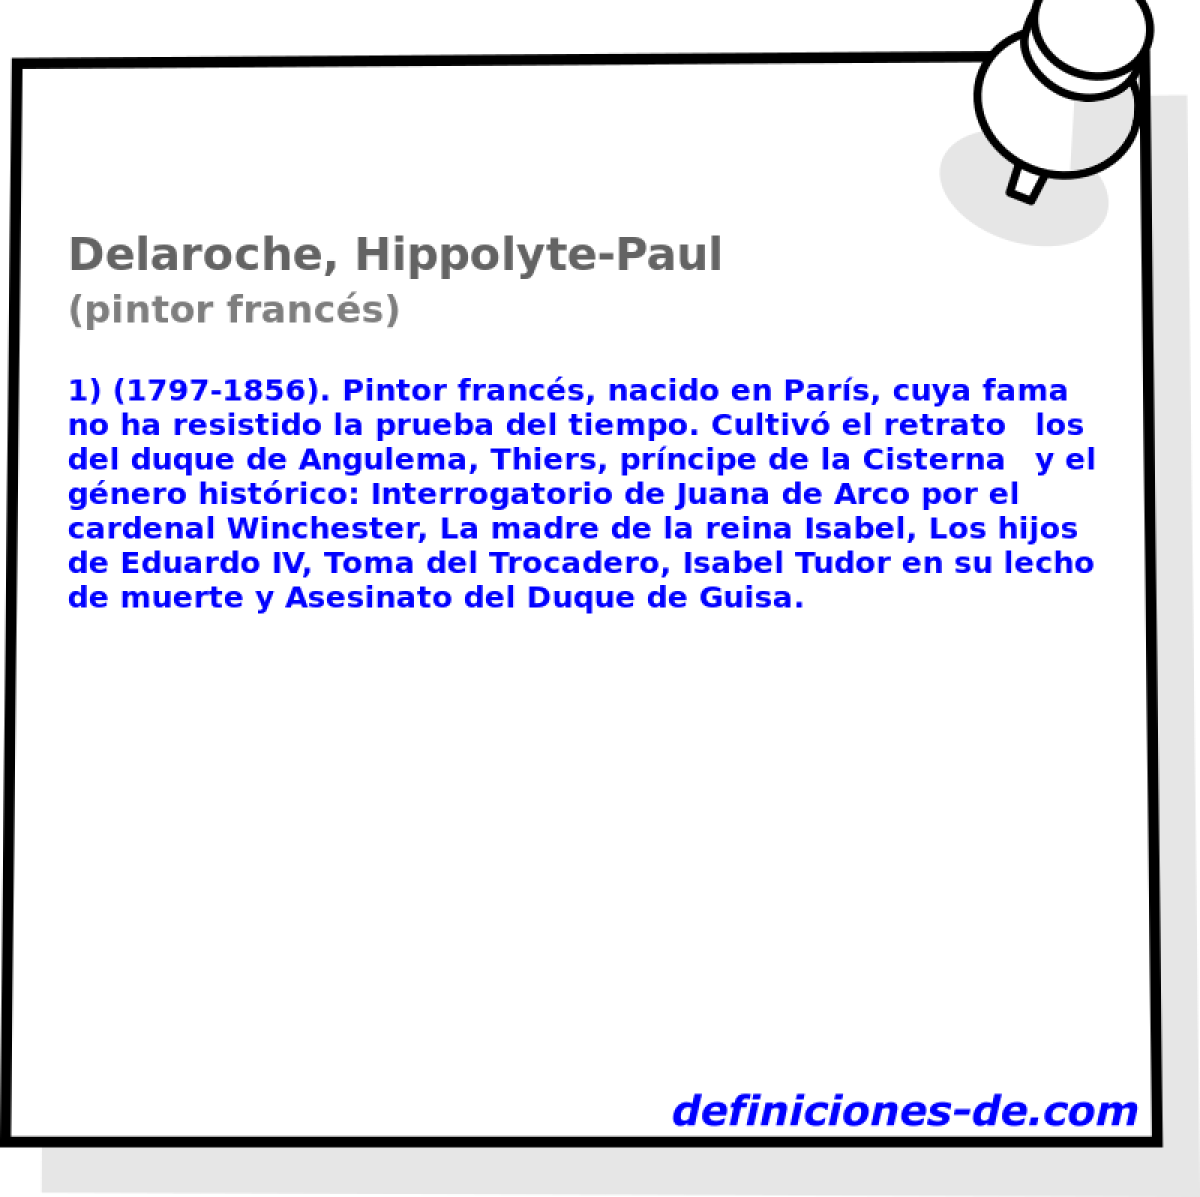 Delaroche, Hippolyte-Paul (pintor francs)